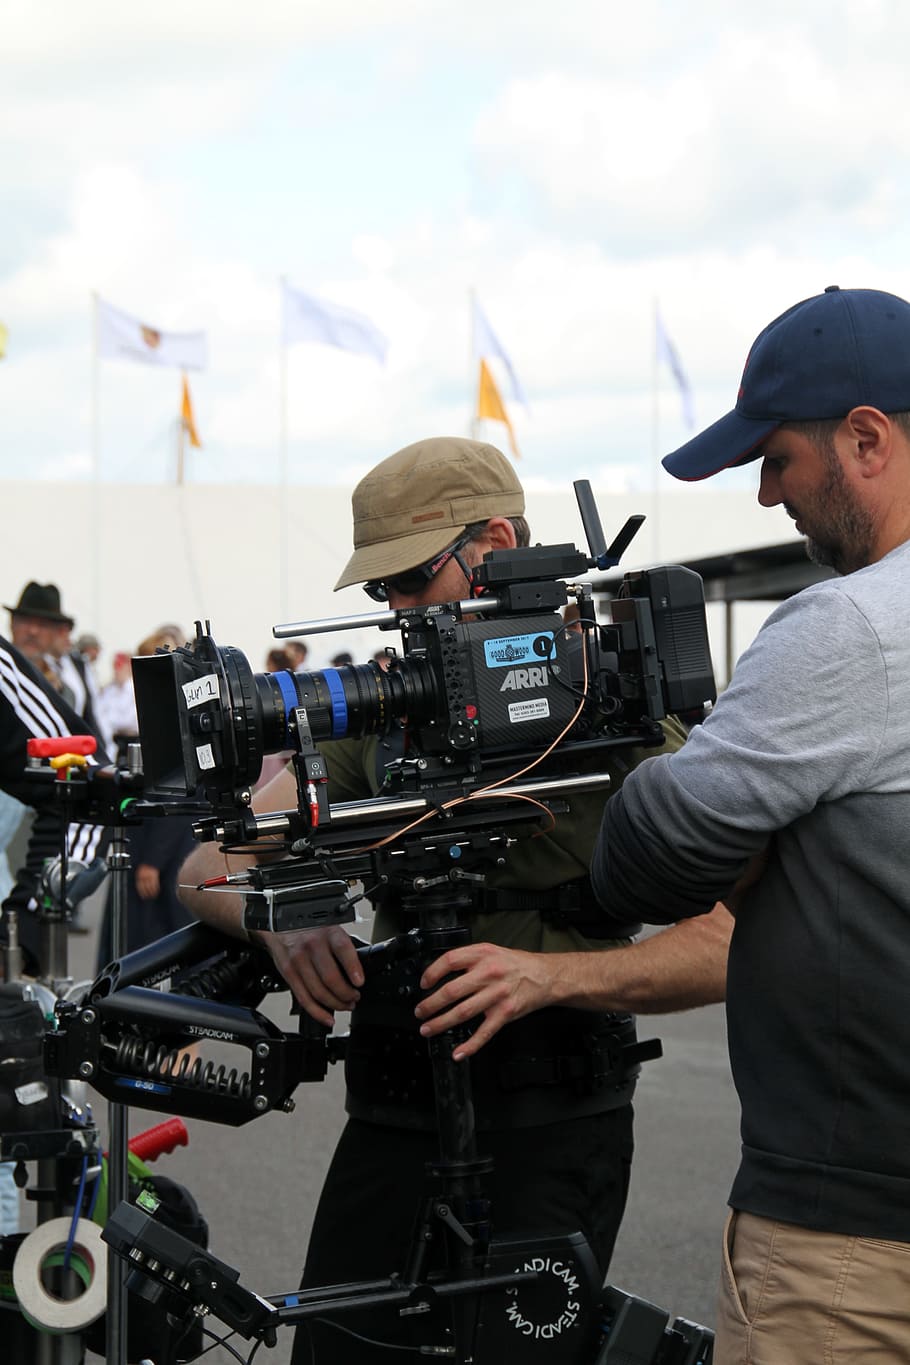 camera, camera man, filming, professional, equipment, tv, film, men, real people, occupation